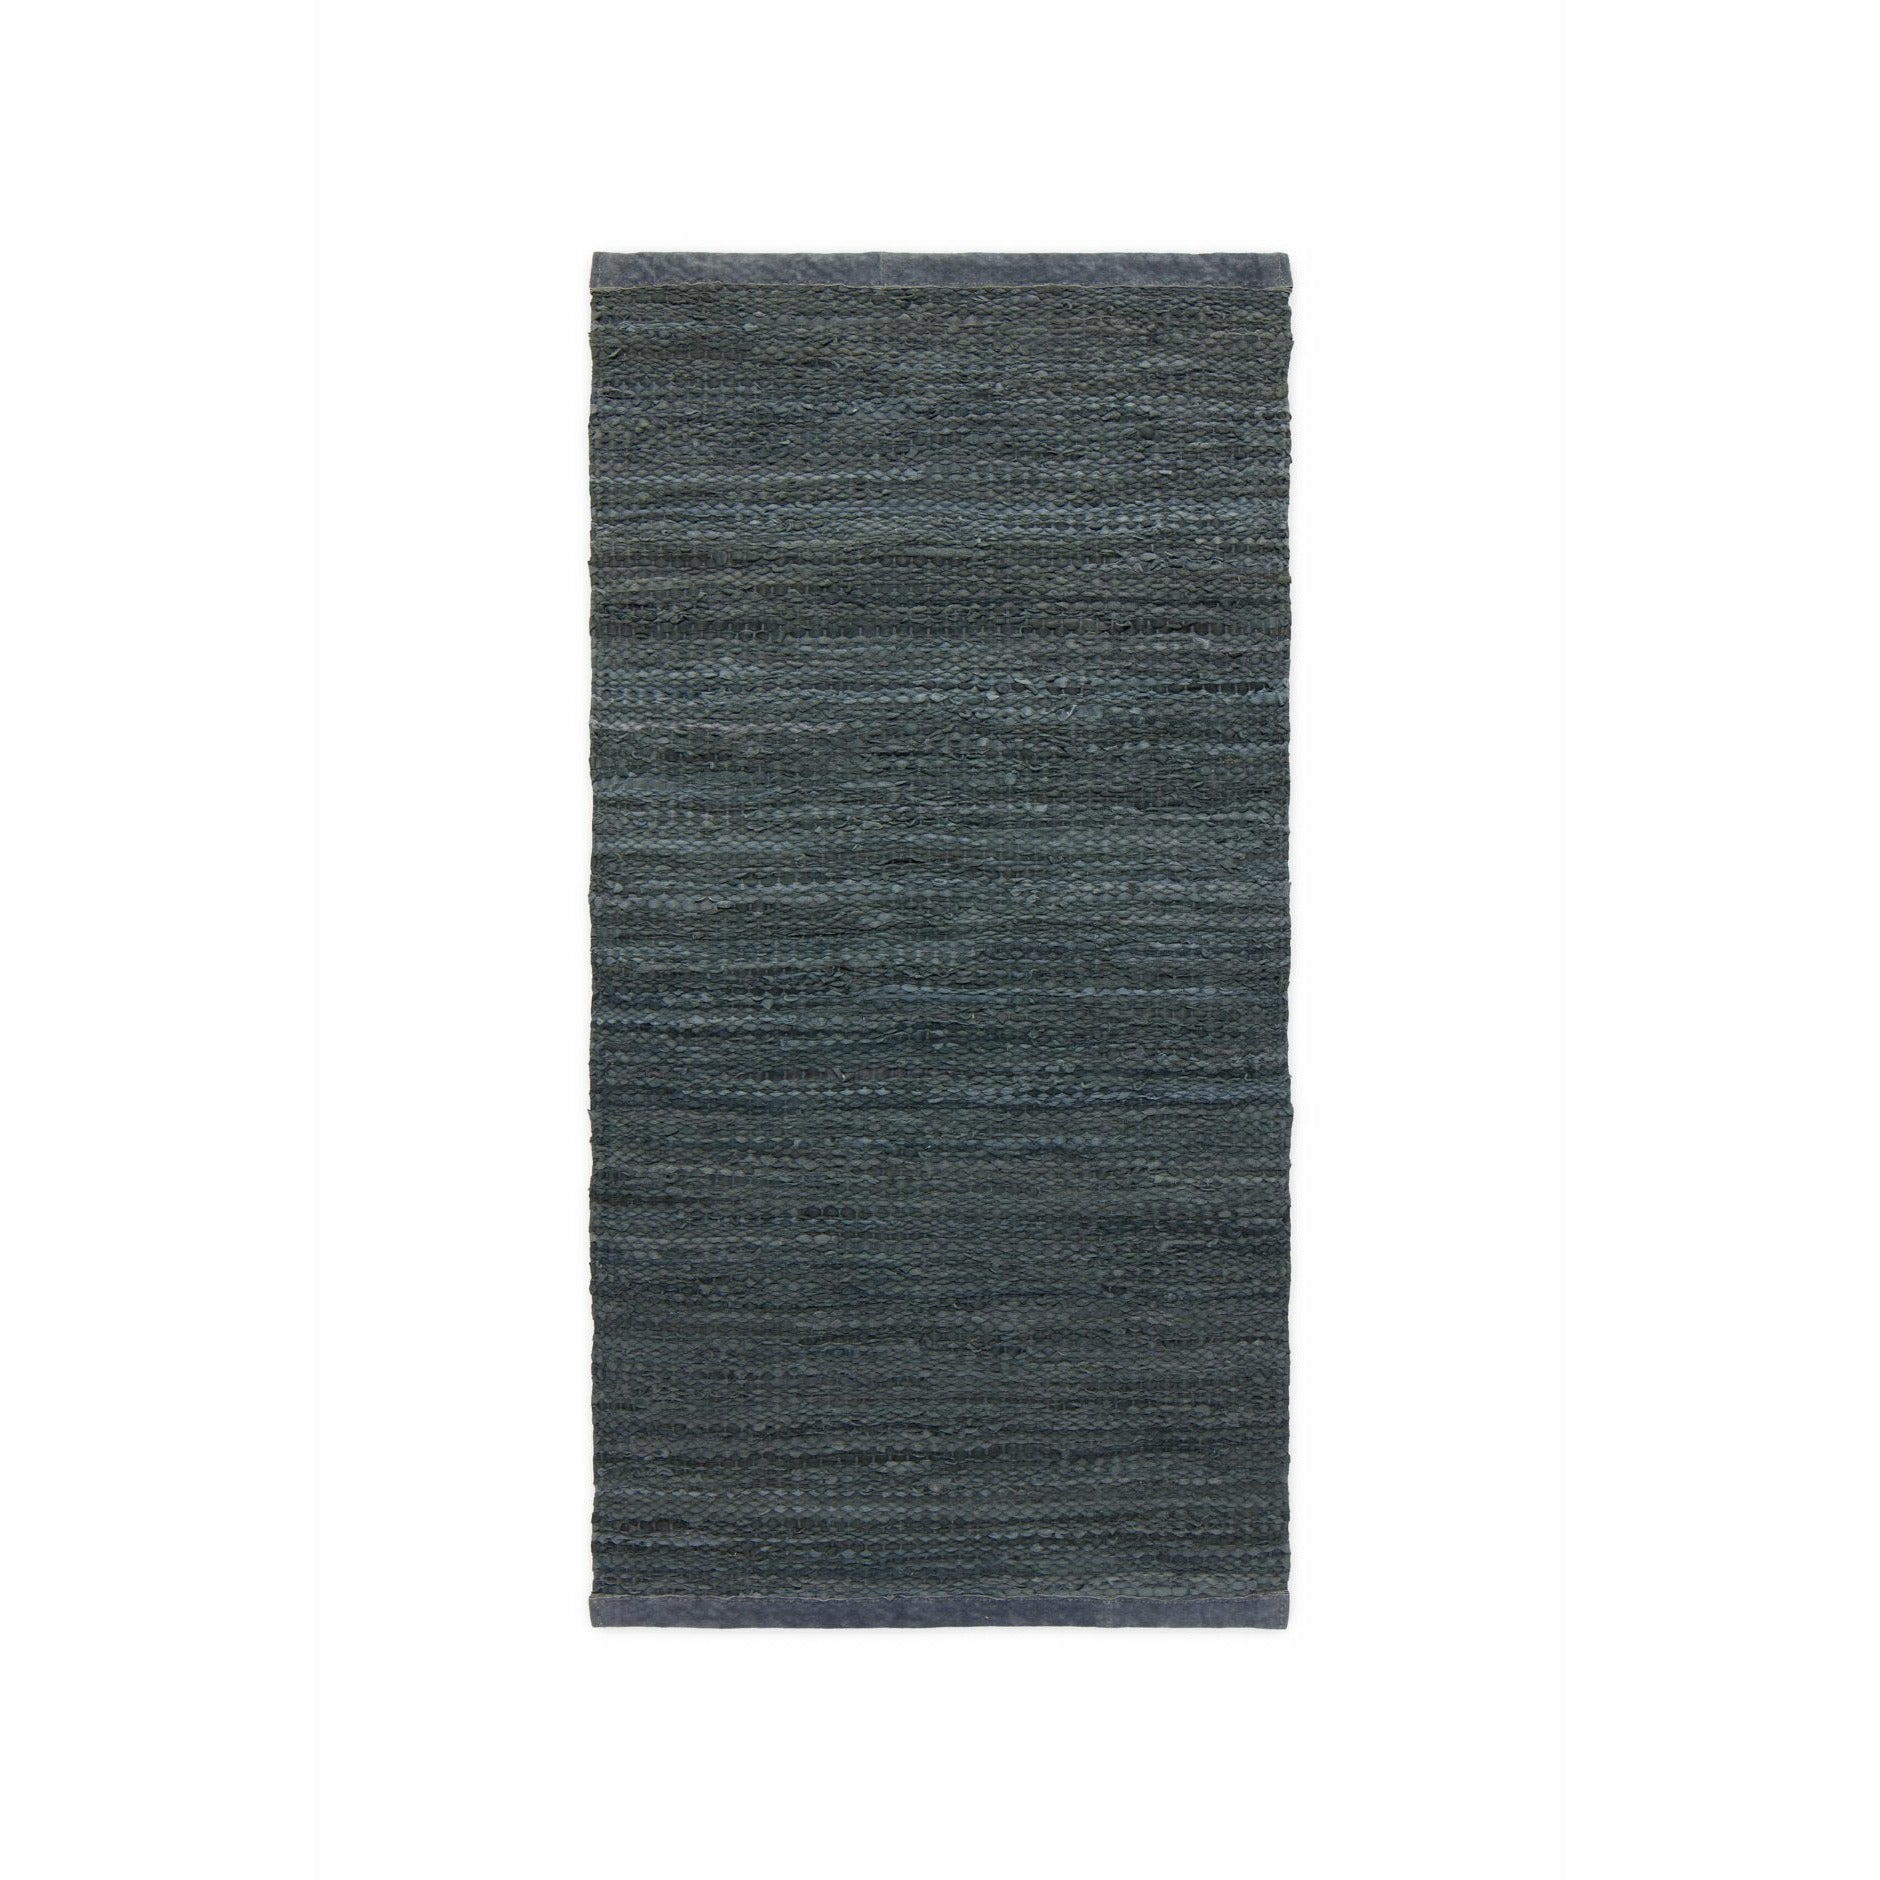 Rug Solid Leer vloerkleed donkergrijs, 65 x 135 cm